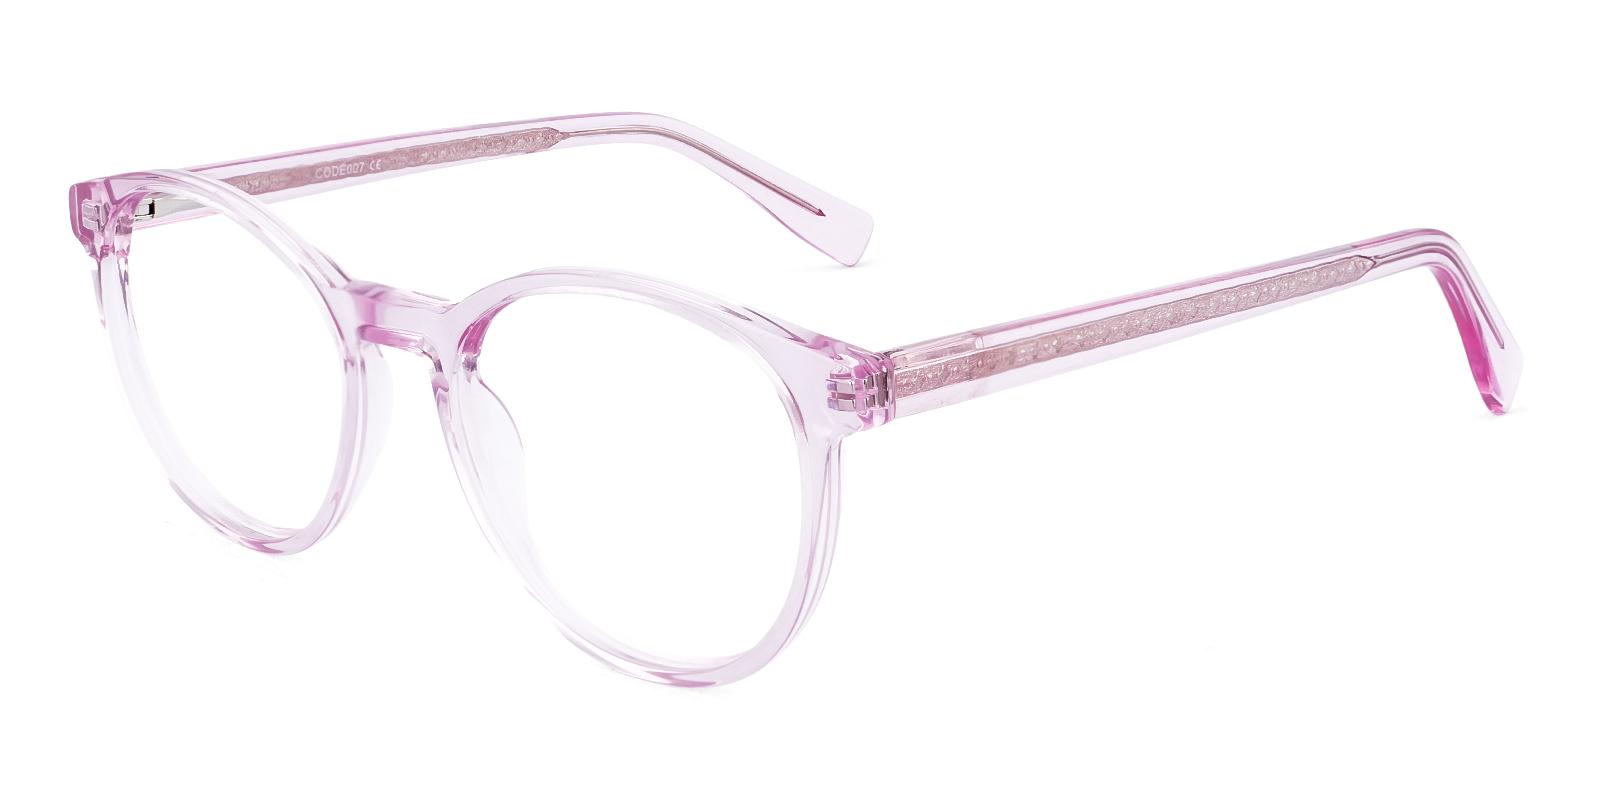 Fascproof Pink Acetate Eyeglasses , SpringHinges , UniversalBridgeFit Frames from ABBE Glasses